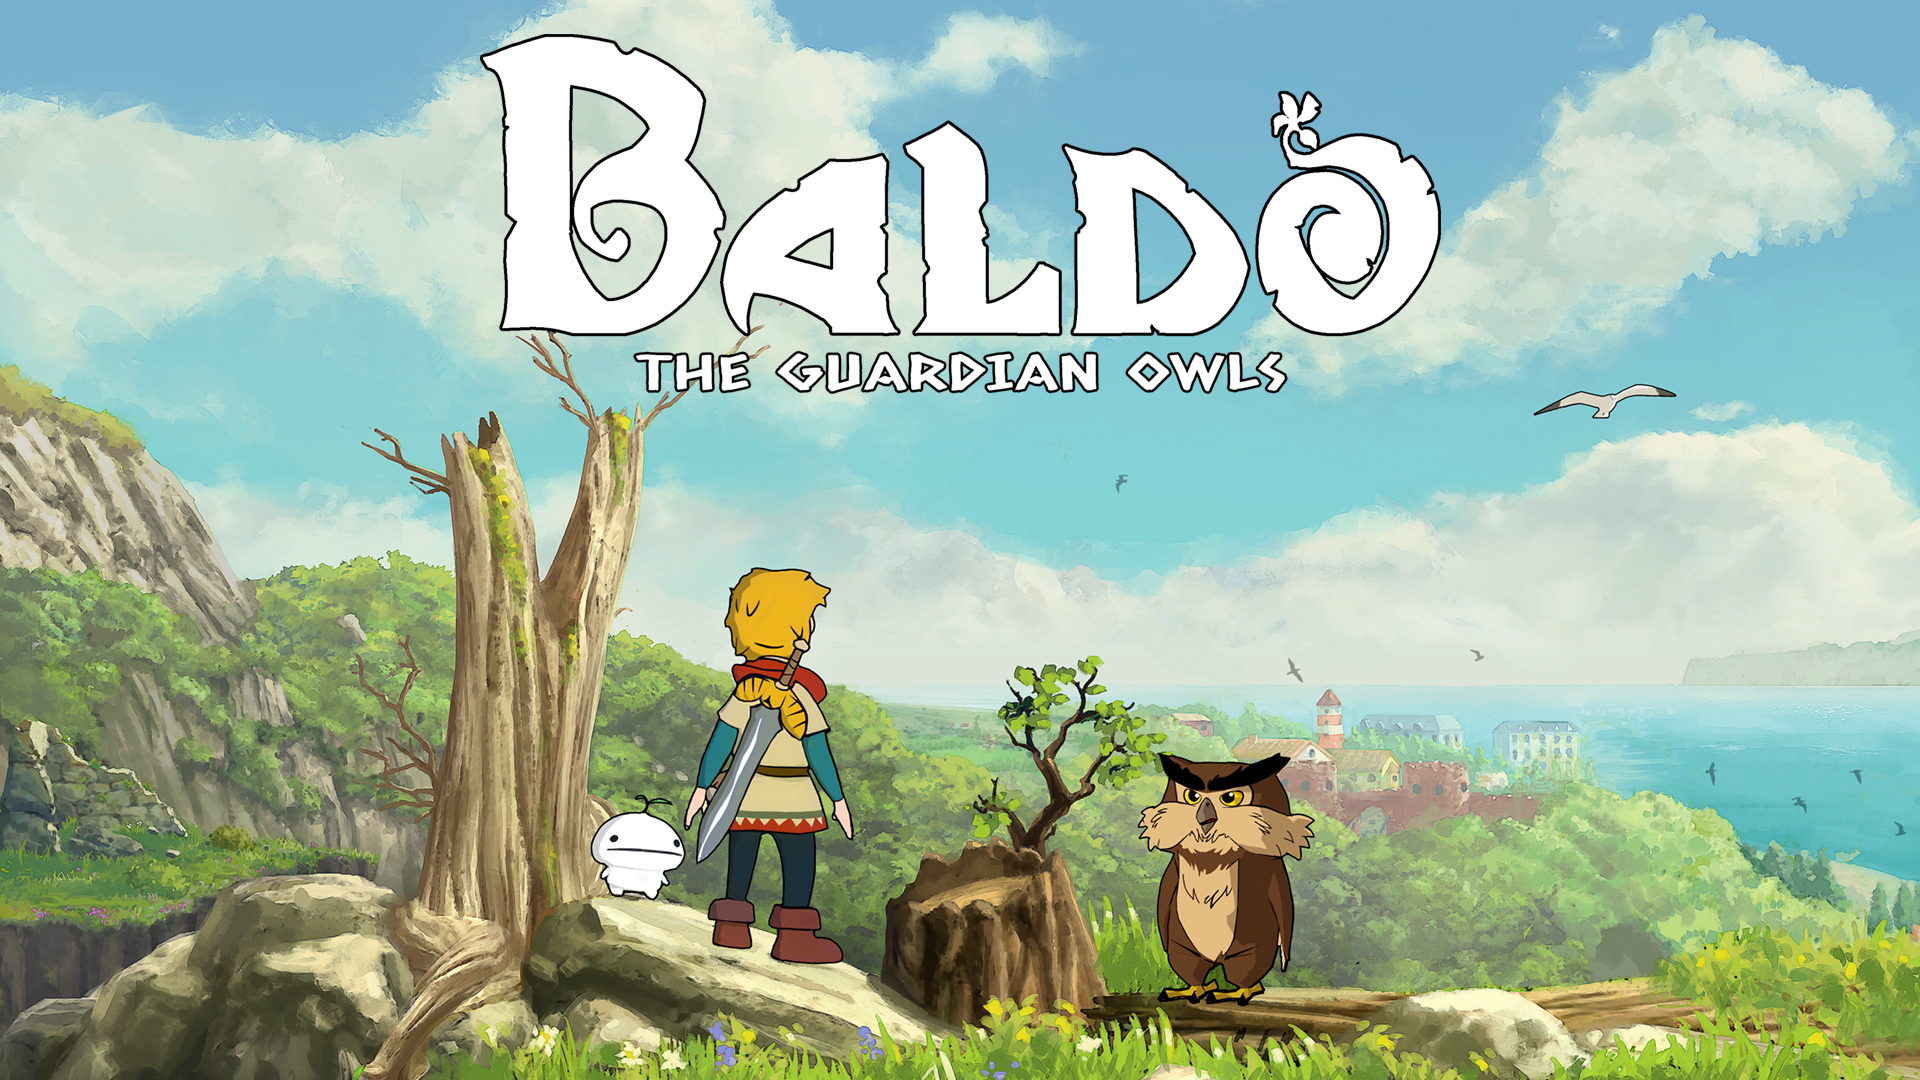 Baldo
The guardian owls